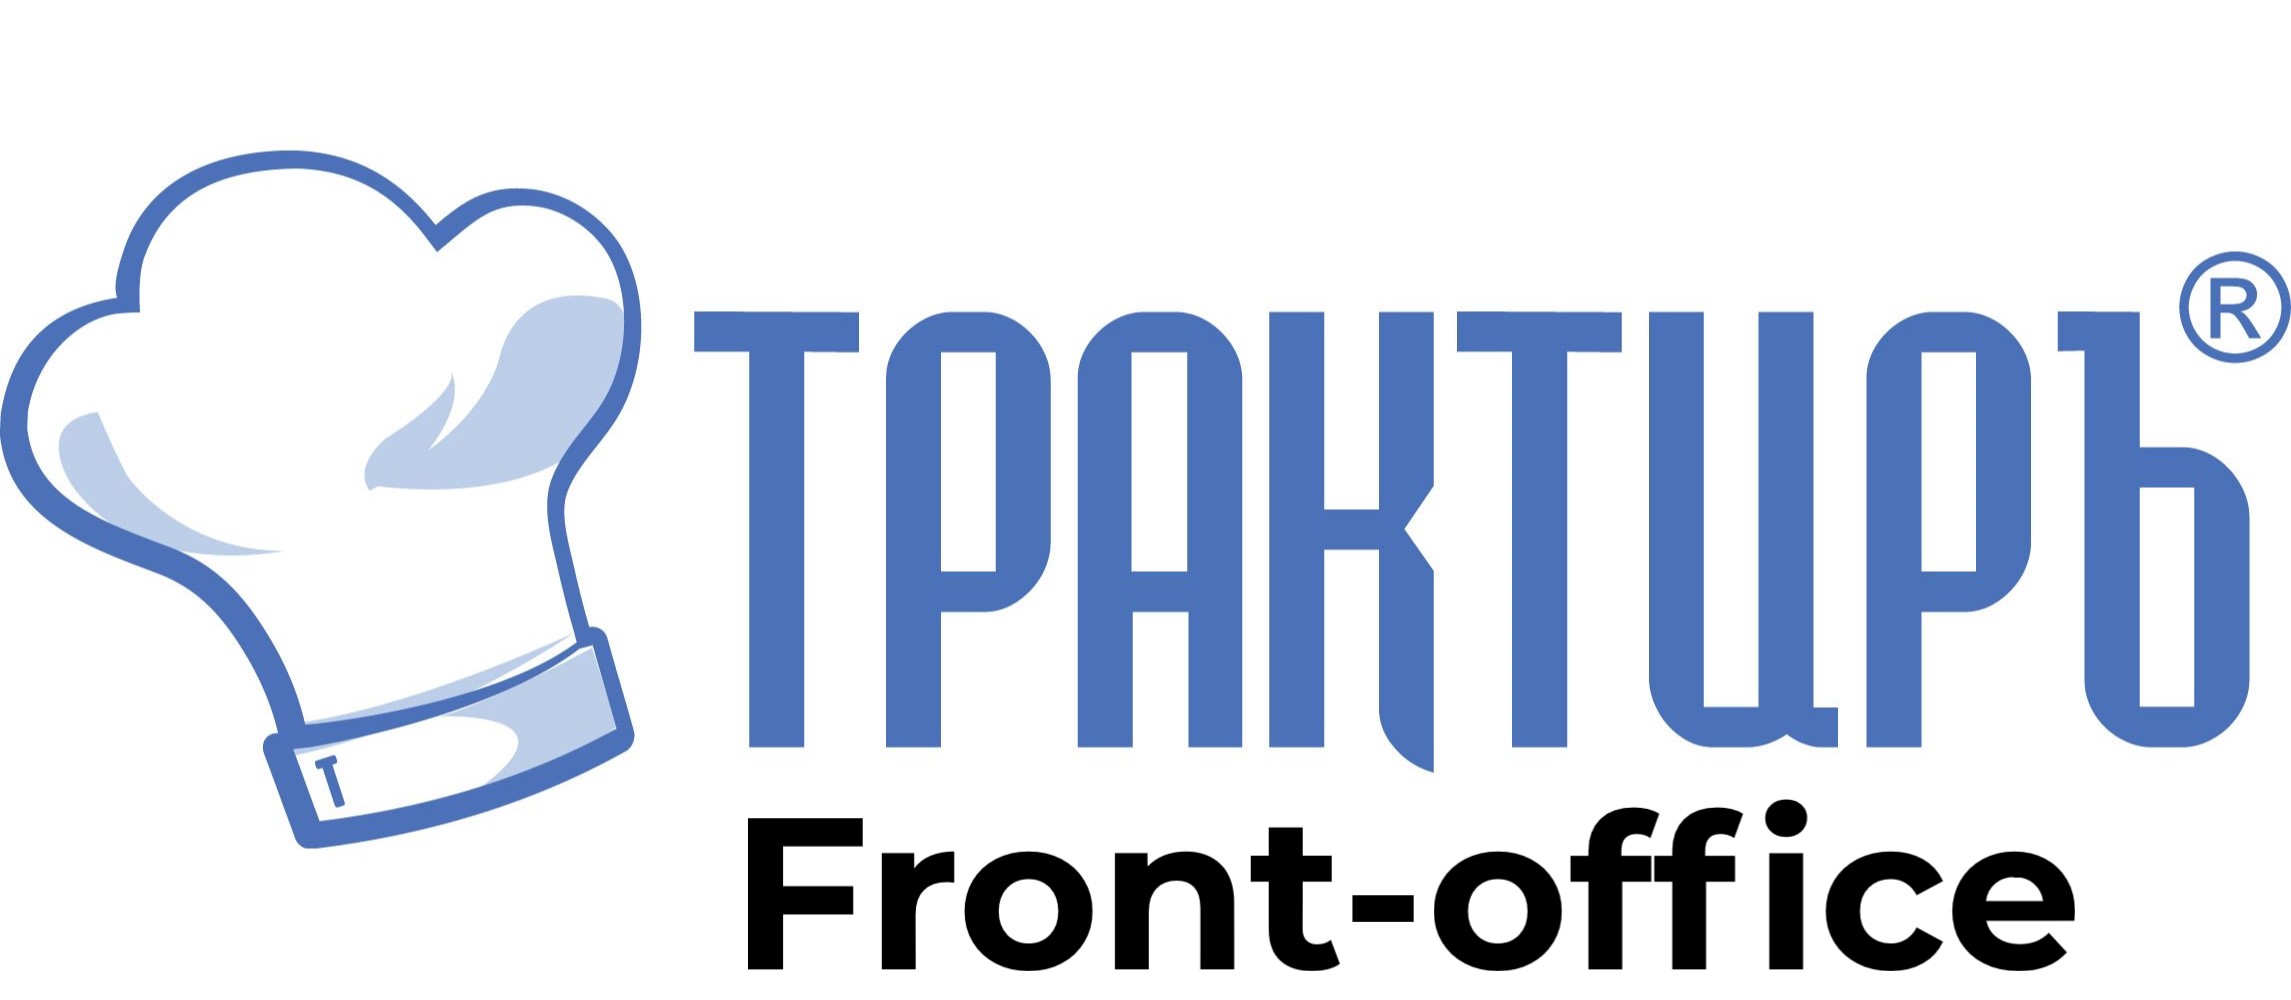 Трактиръ: Front-Office v4.5  Основная поставка в Ярославле